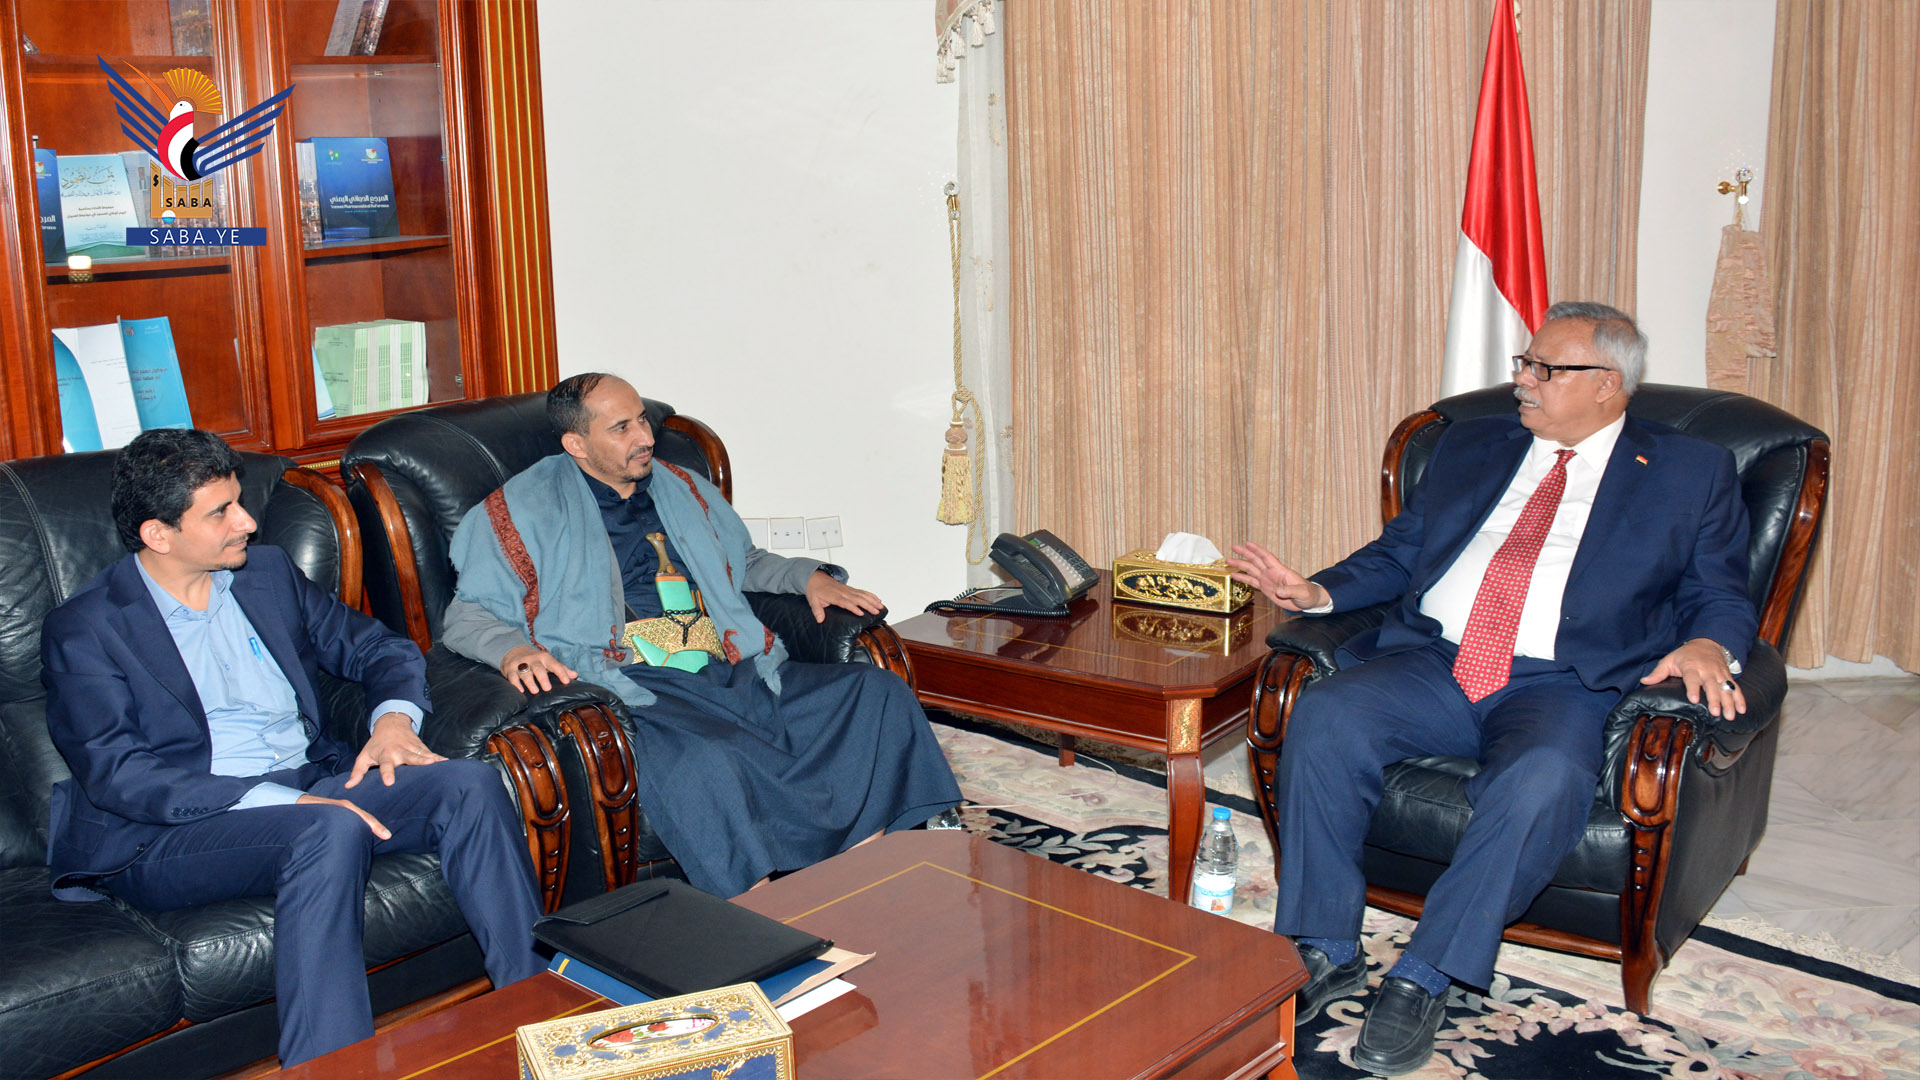 PM commends effort to develop Yemeni Economic Foundation activities